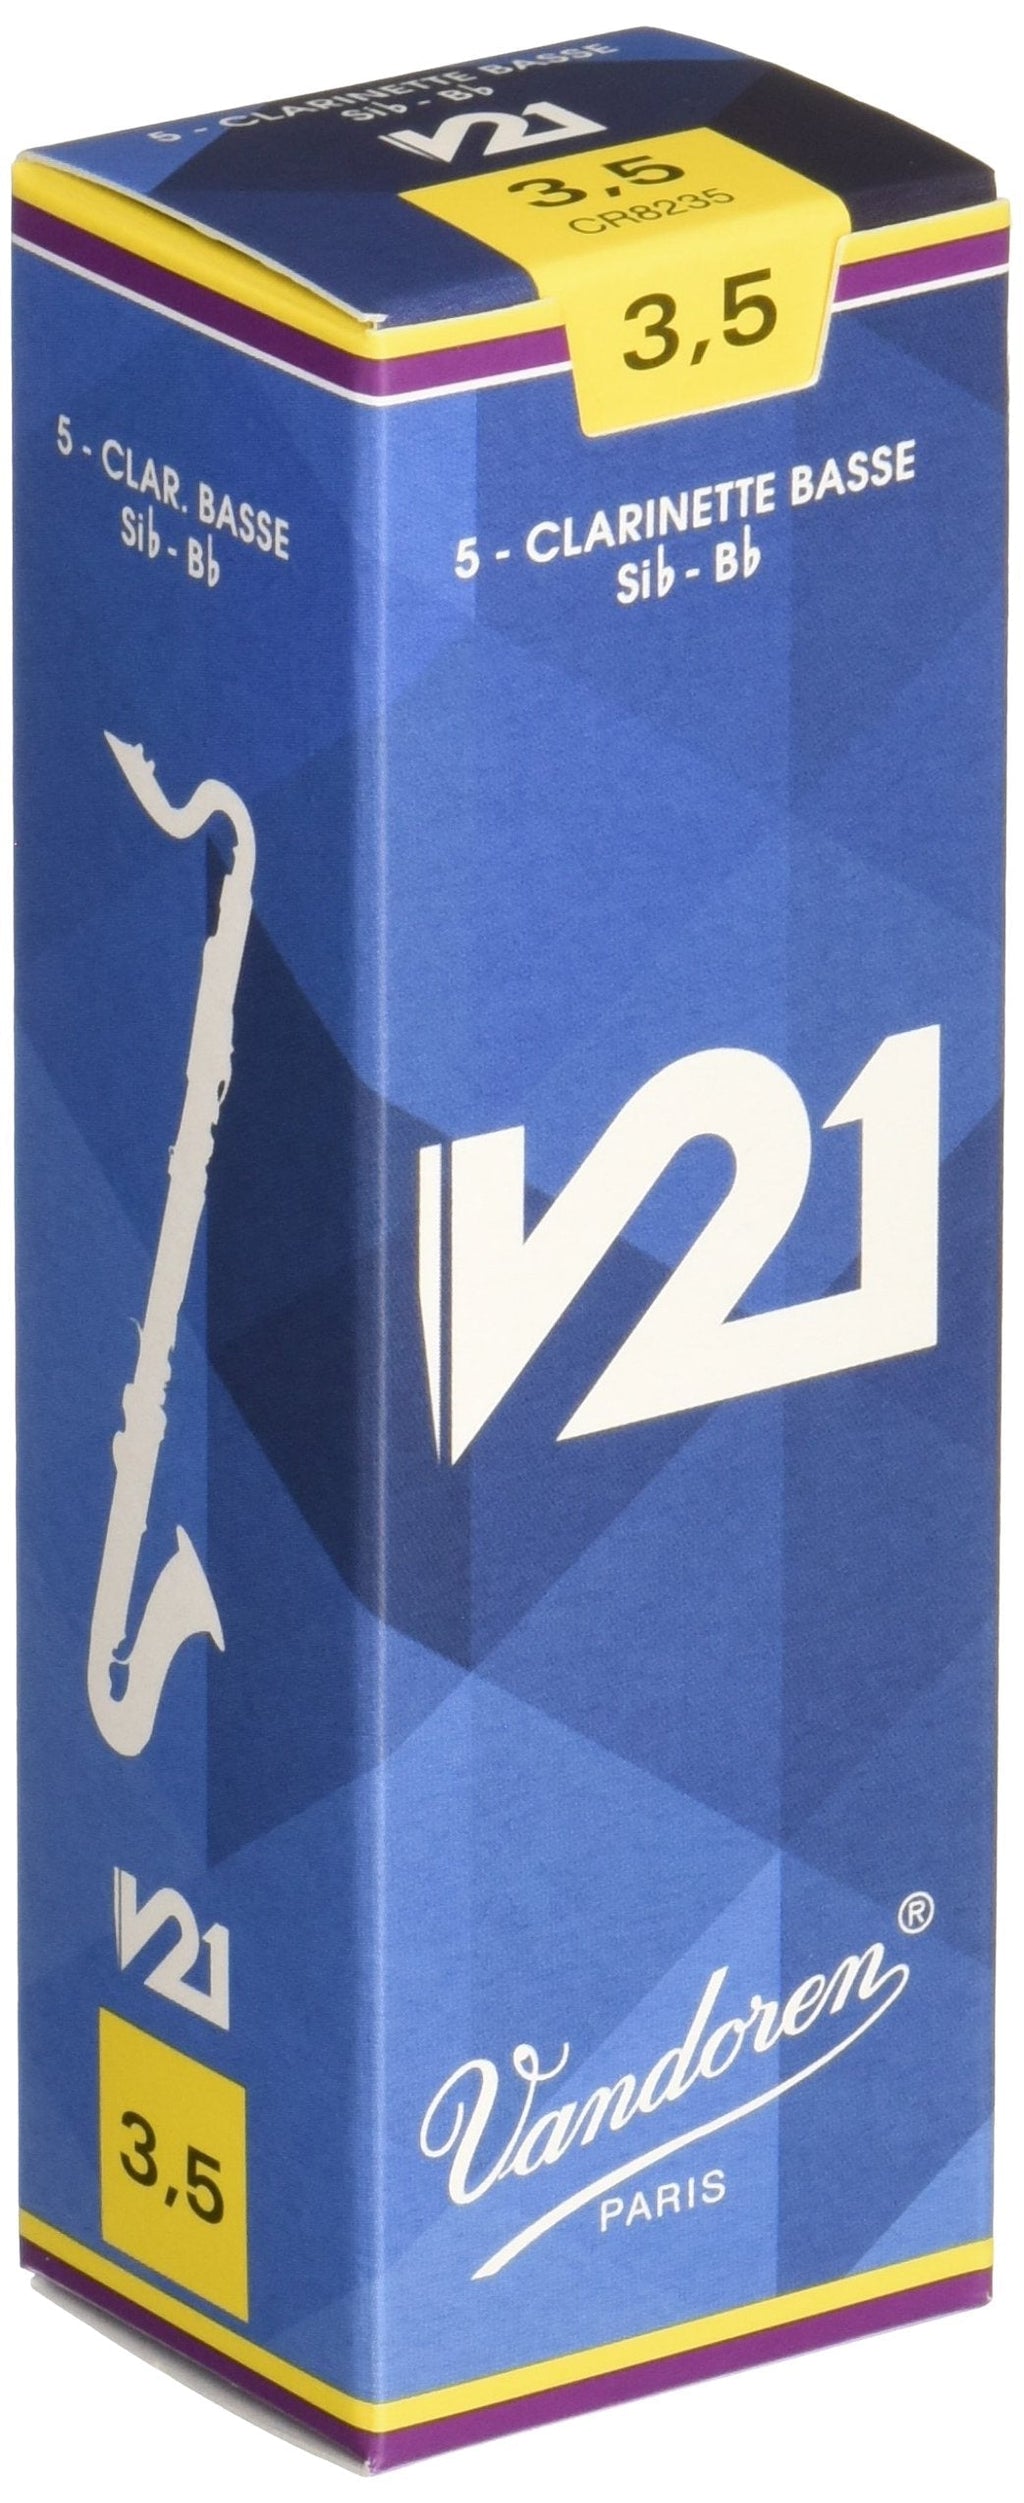 Vandoren CR8235 Bass Clarinet V21 Reeds Strength 3.5, Box of 5